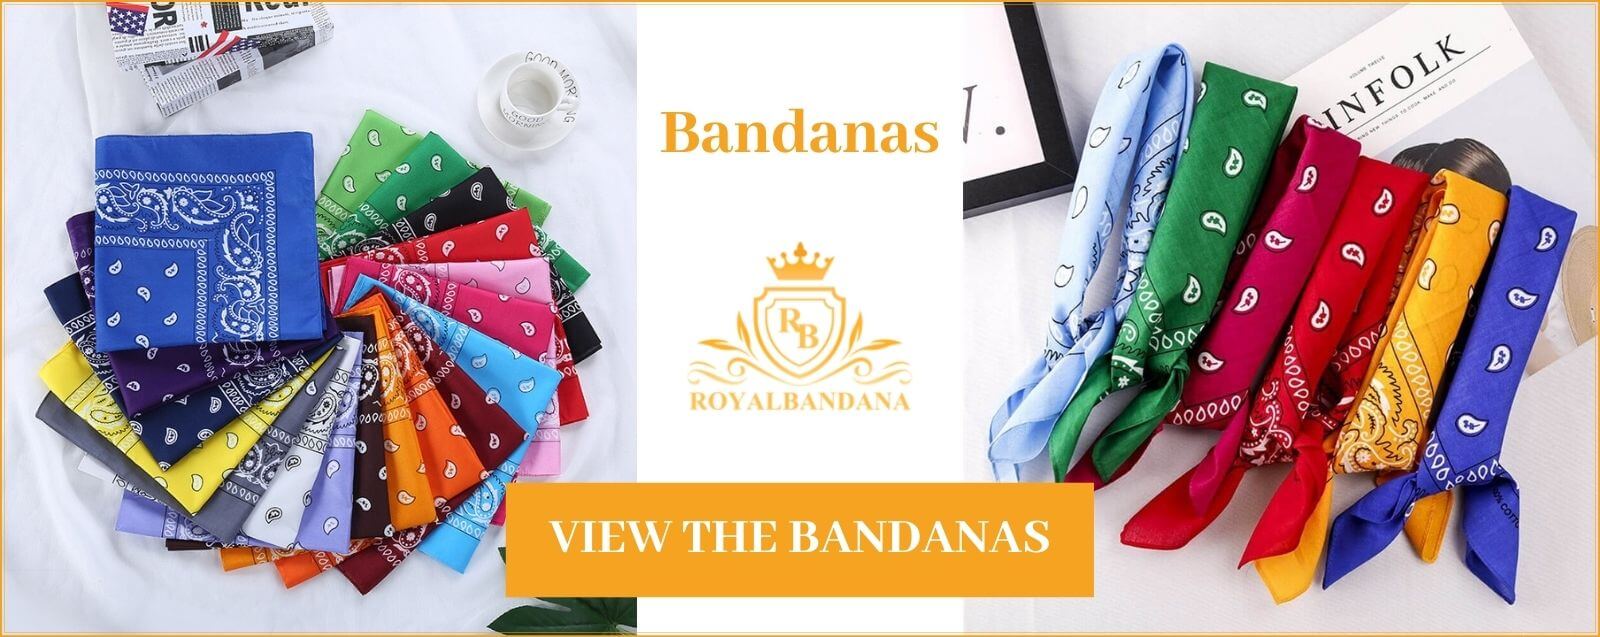 see-collection-bandana-for-men-royalbandana